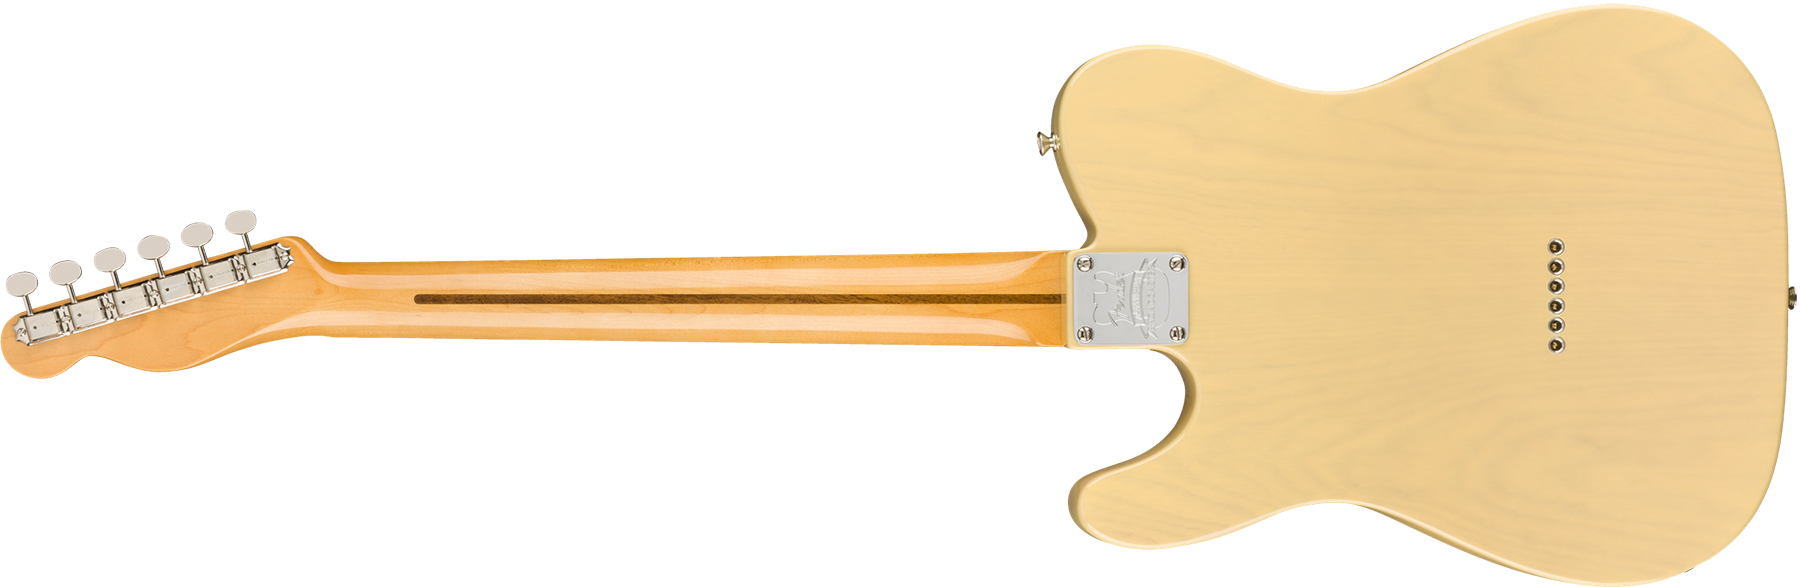 Fender Tele Broadcaster 70th Anniversary Usa Mn - Blackguard Blonde - Televorm elektrische gitaar - Variation 1